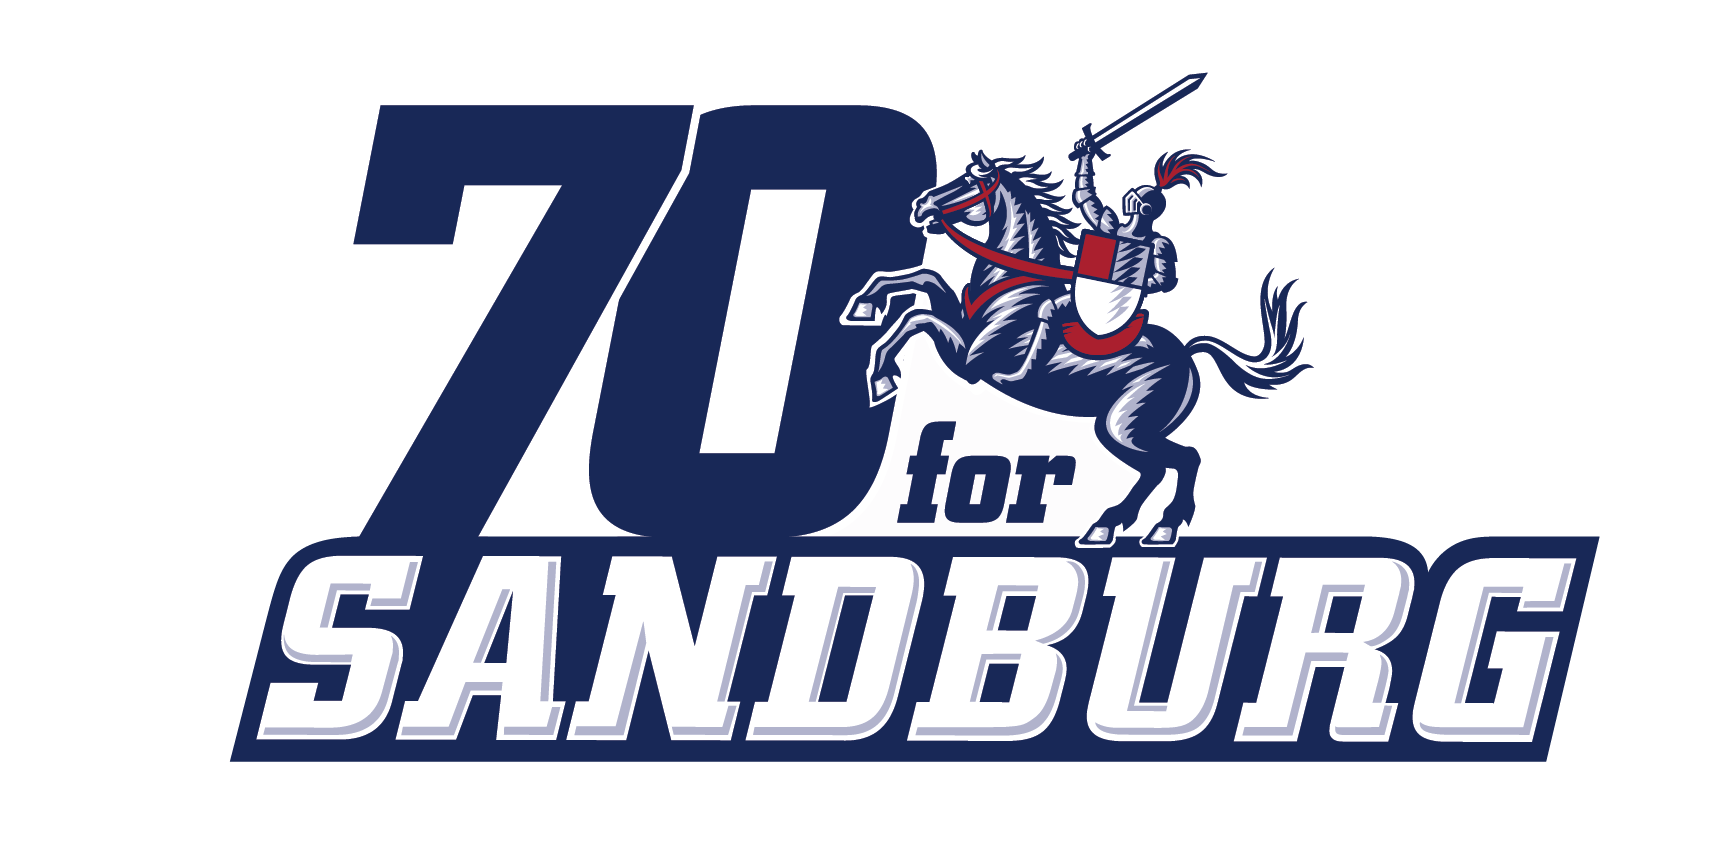 70 for Sandburg logo